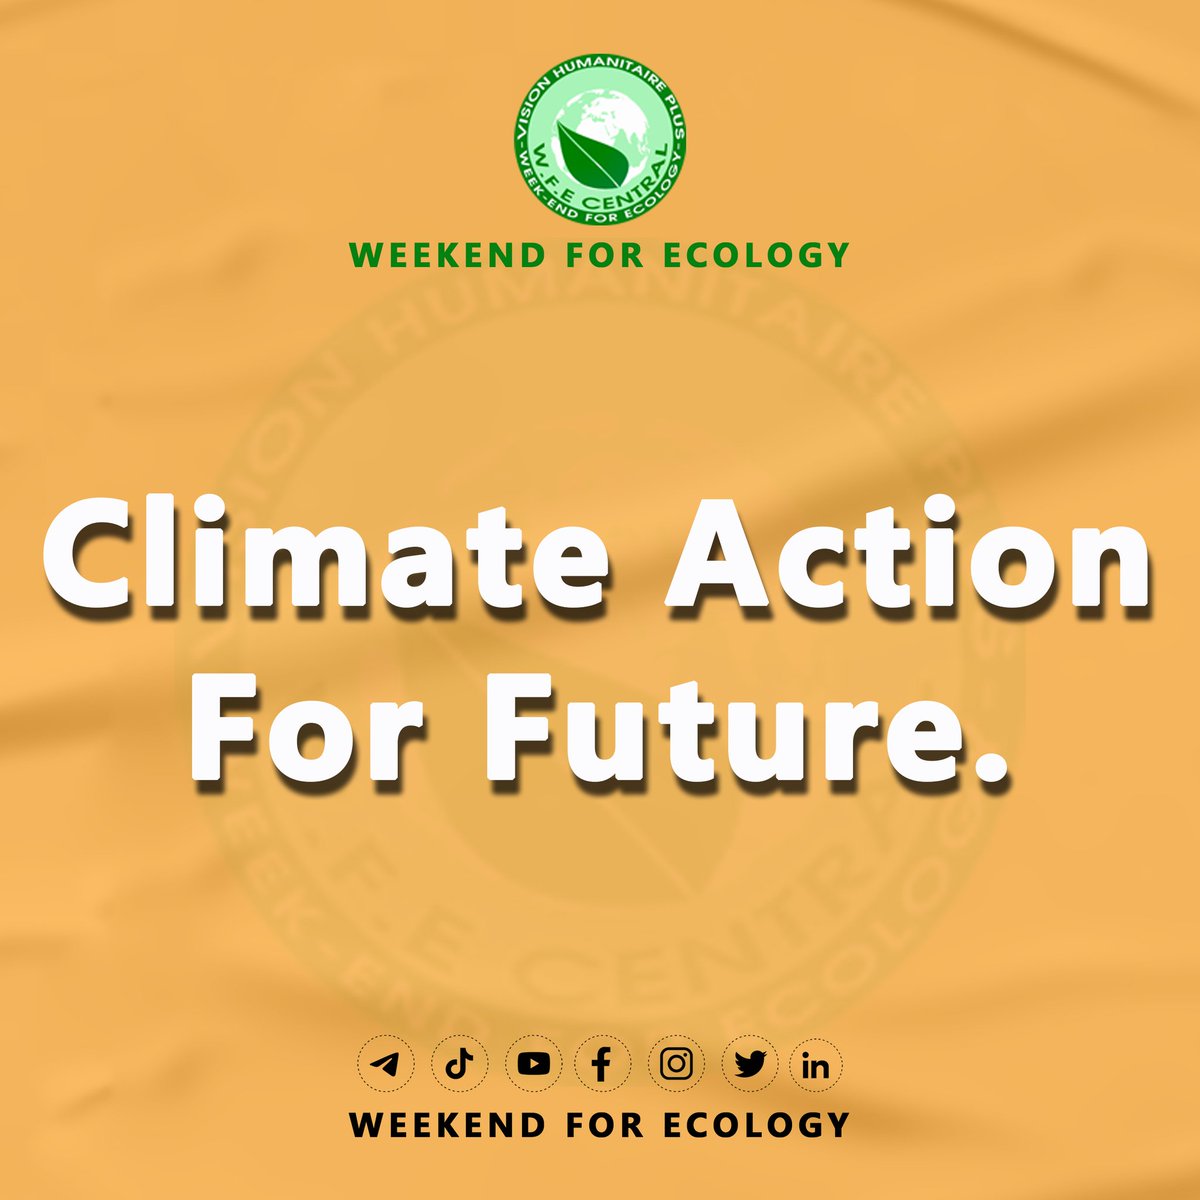 Climate Action For Future.  #WeekendForEcology
#climatestrikeonline  #ClimateActionNow 
#ClimateEmergency
#VisionHumanitairePlus